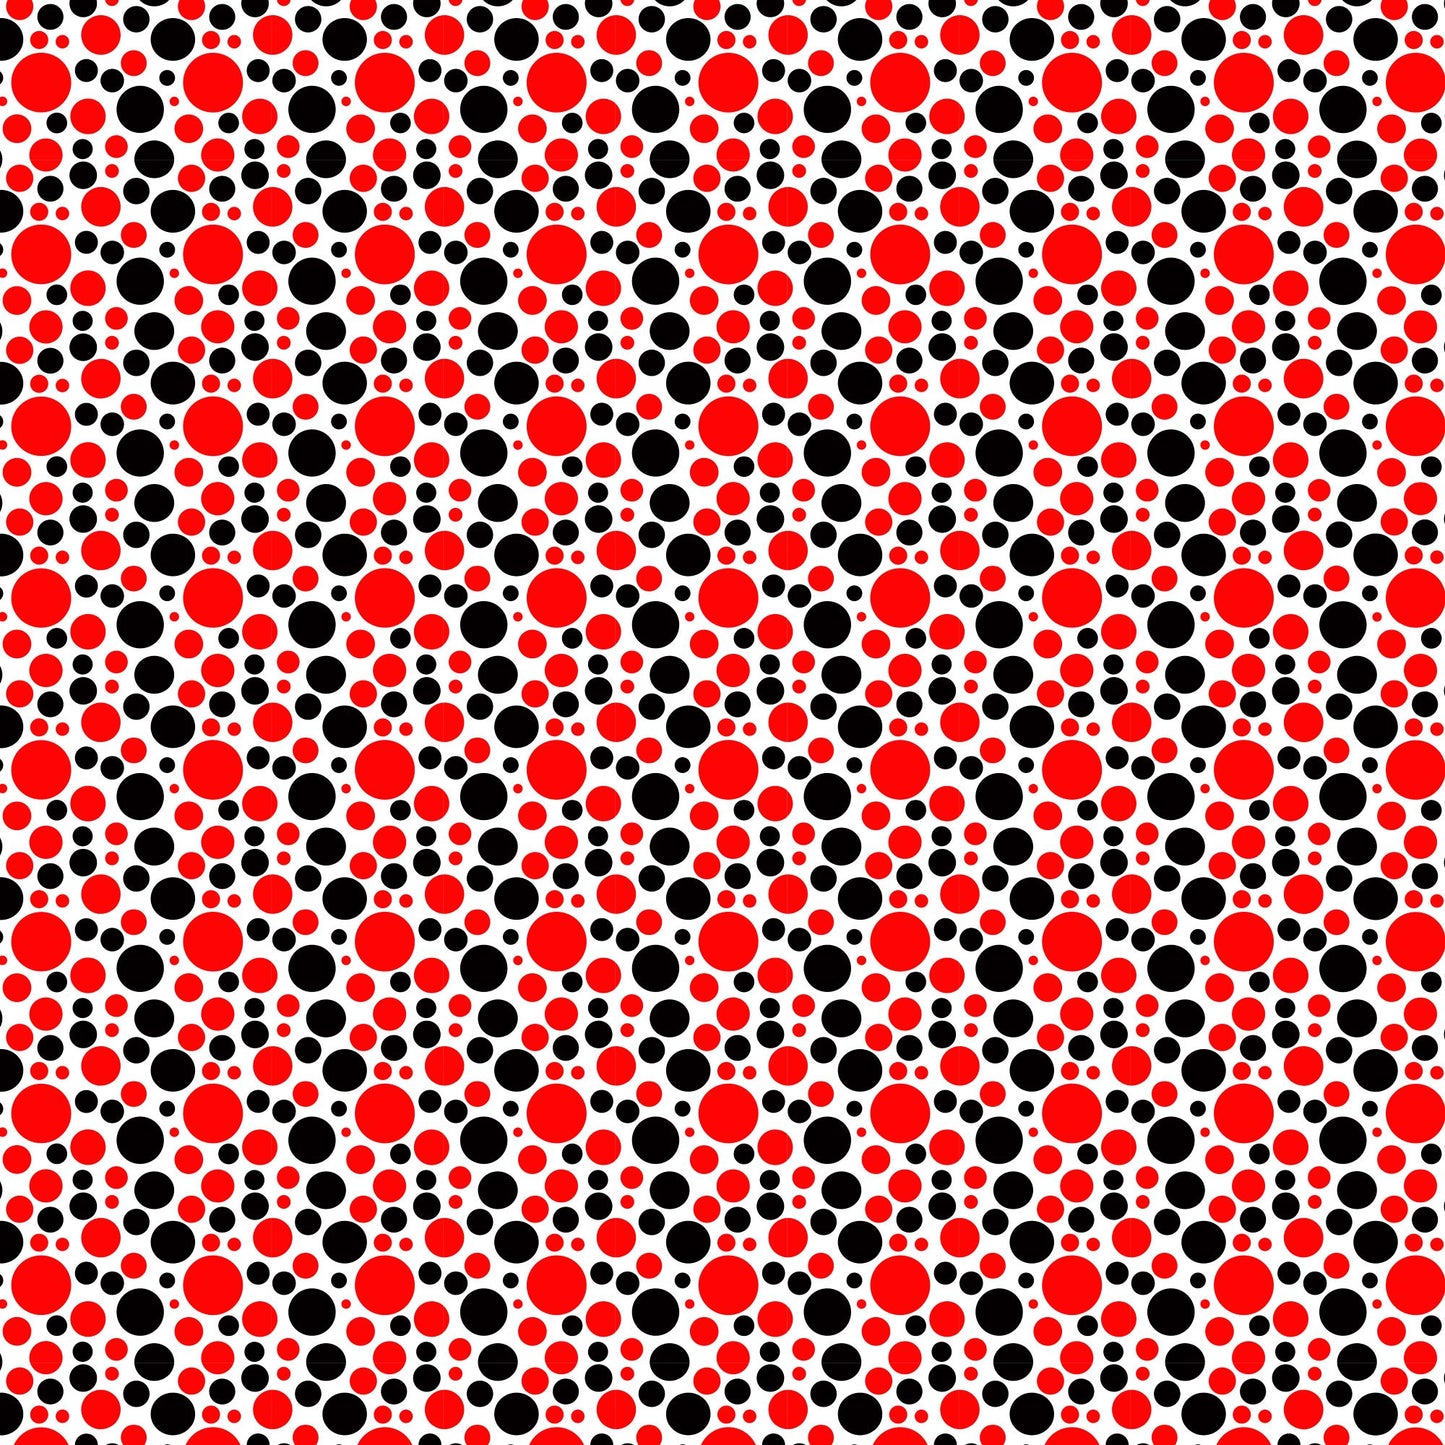 Ladybug Dots - Adhesive Vinyl